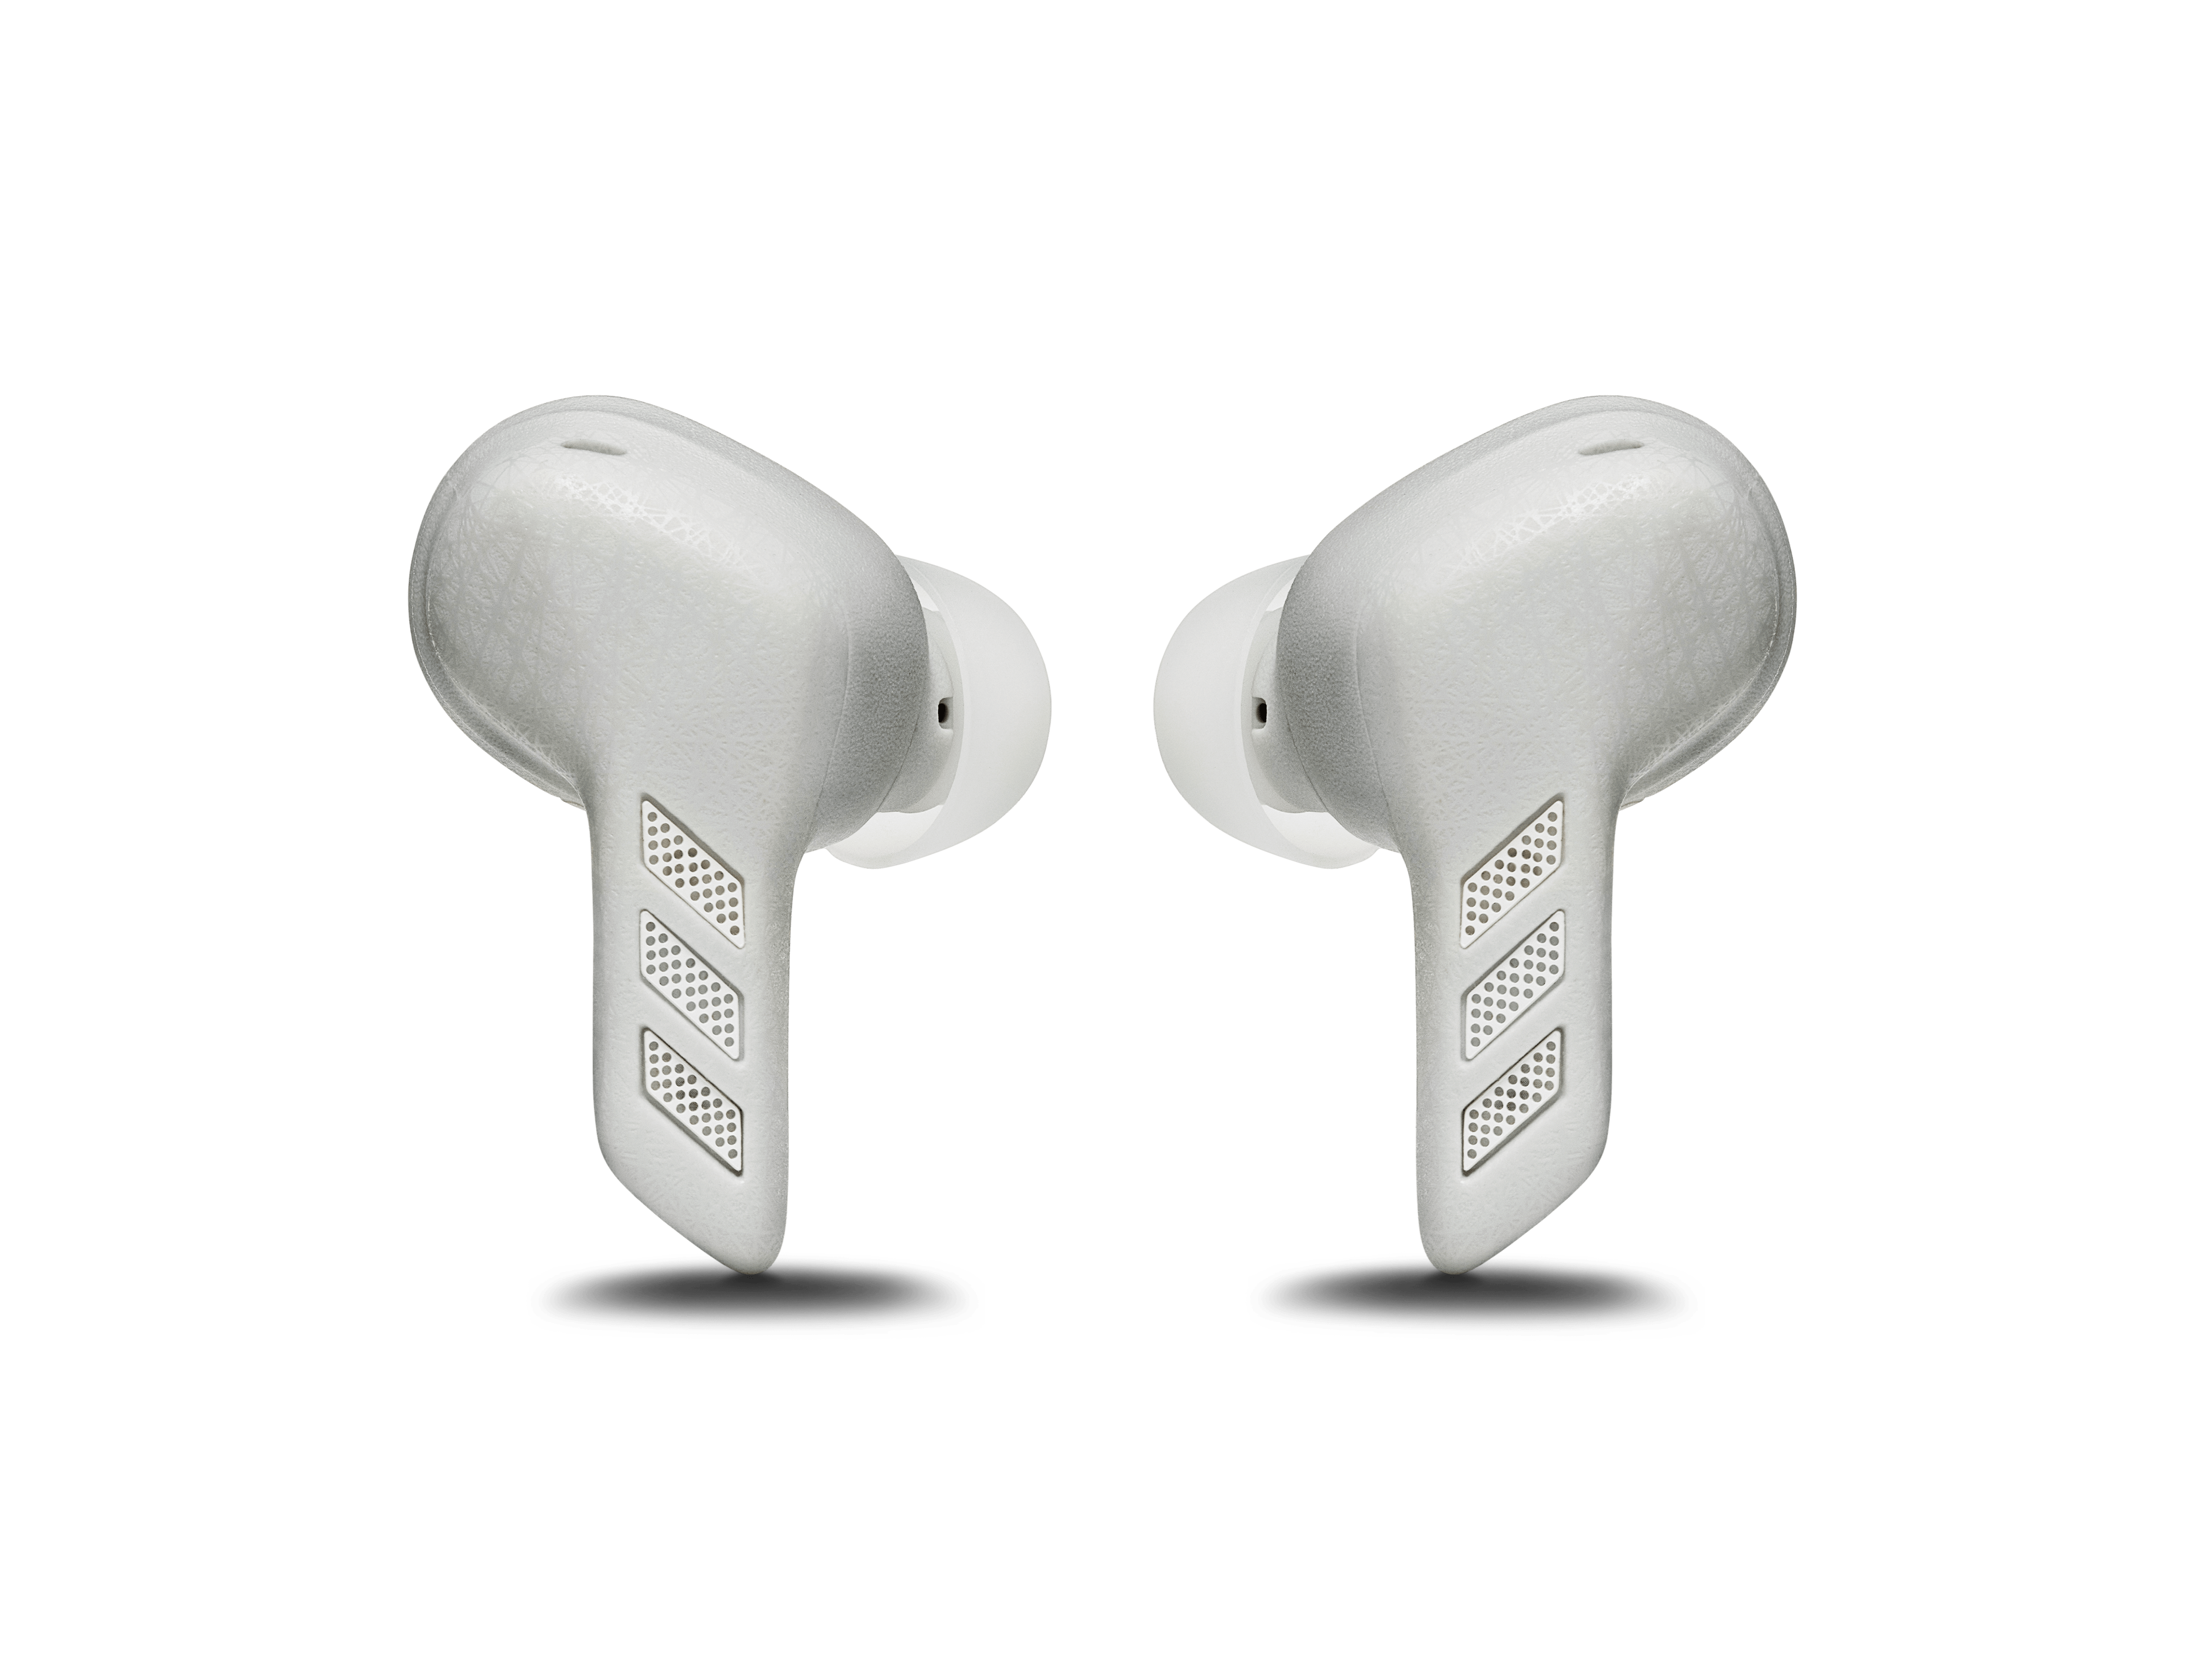 Adidas lanceert drie volledig draadloze in ear hoofdtelefoons